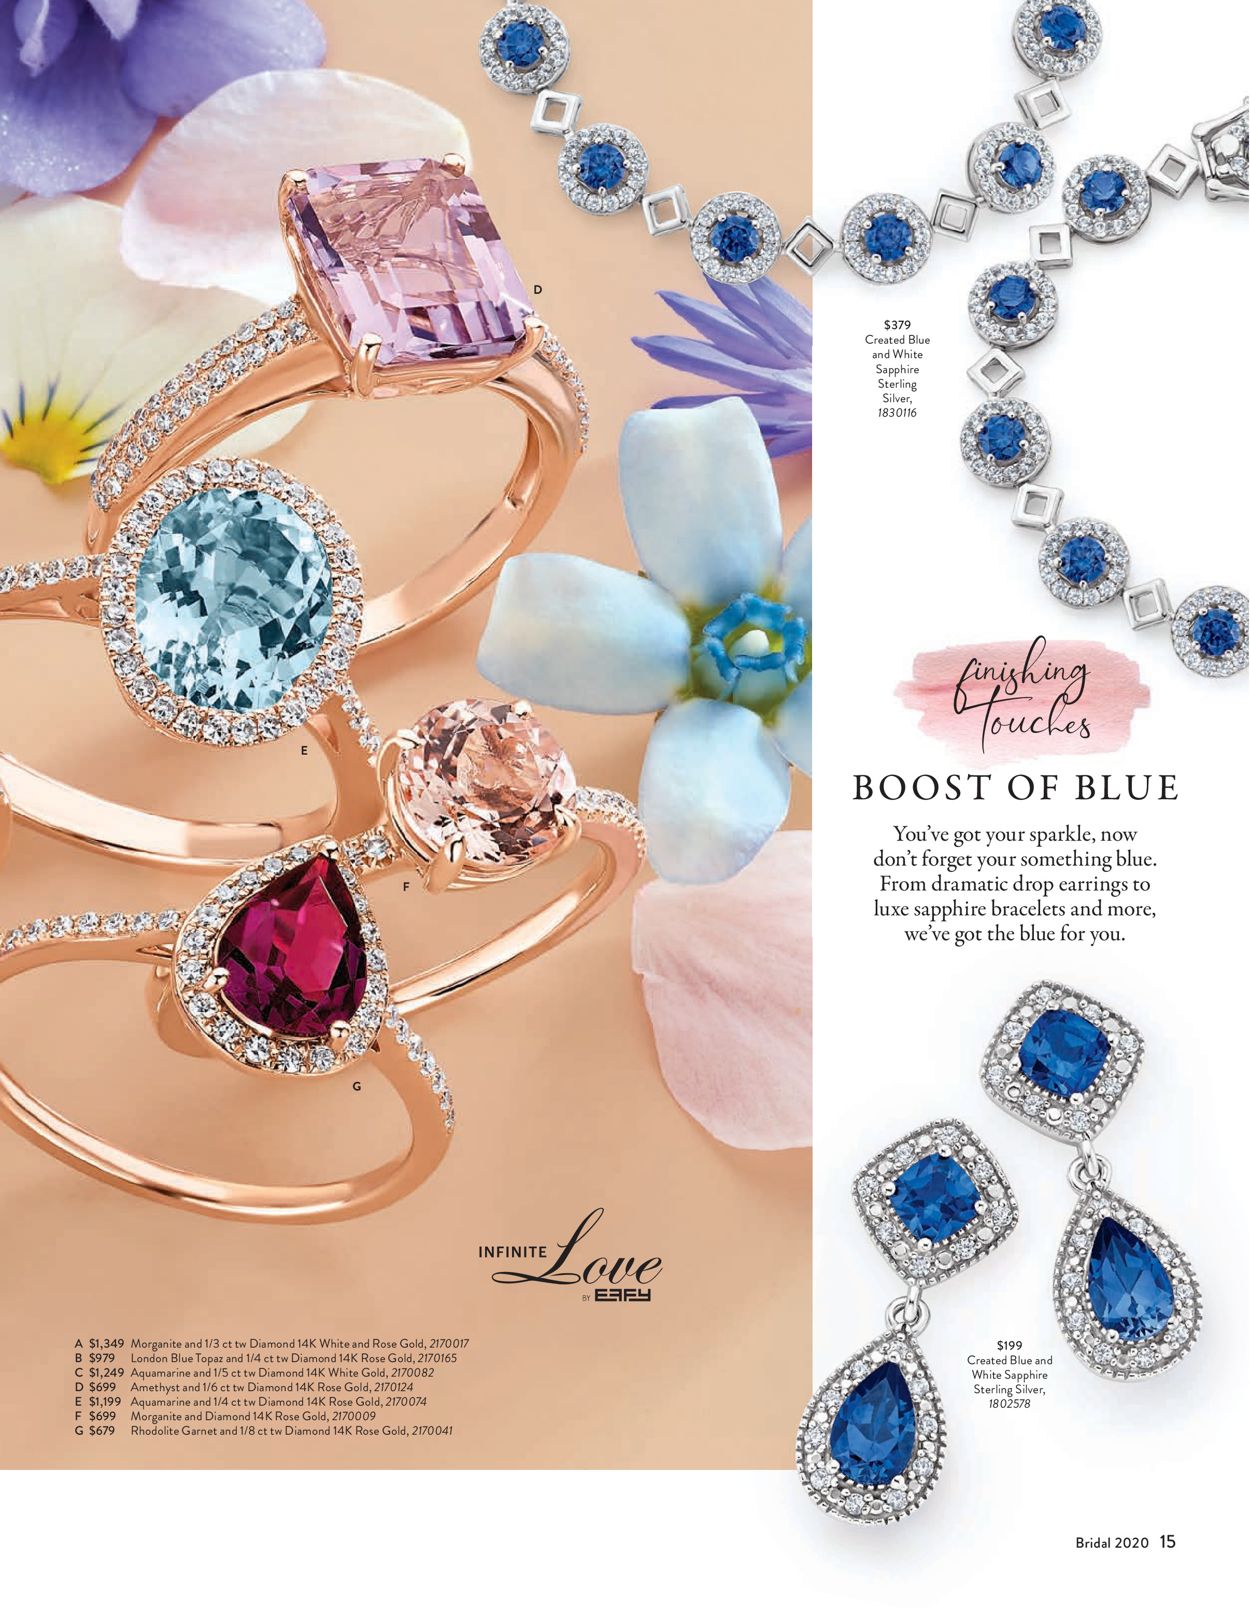 Catalogue Littman Jewelers from 06/24/2020